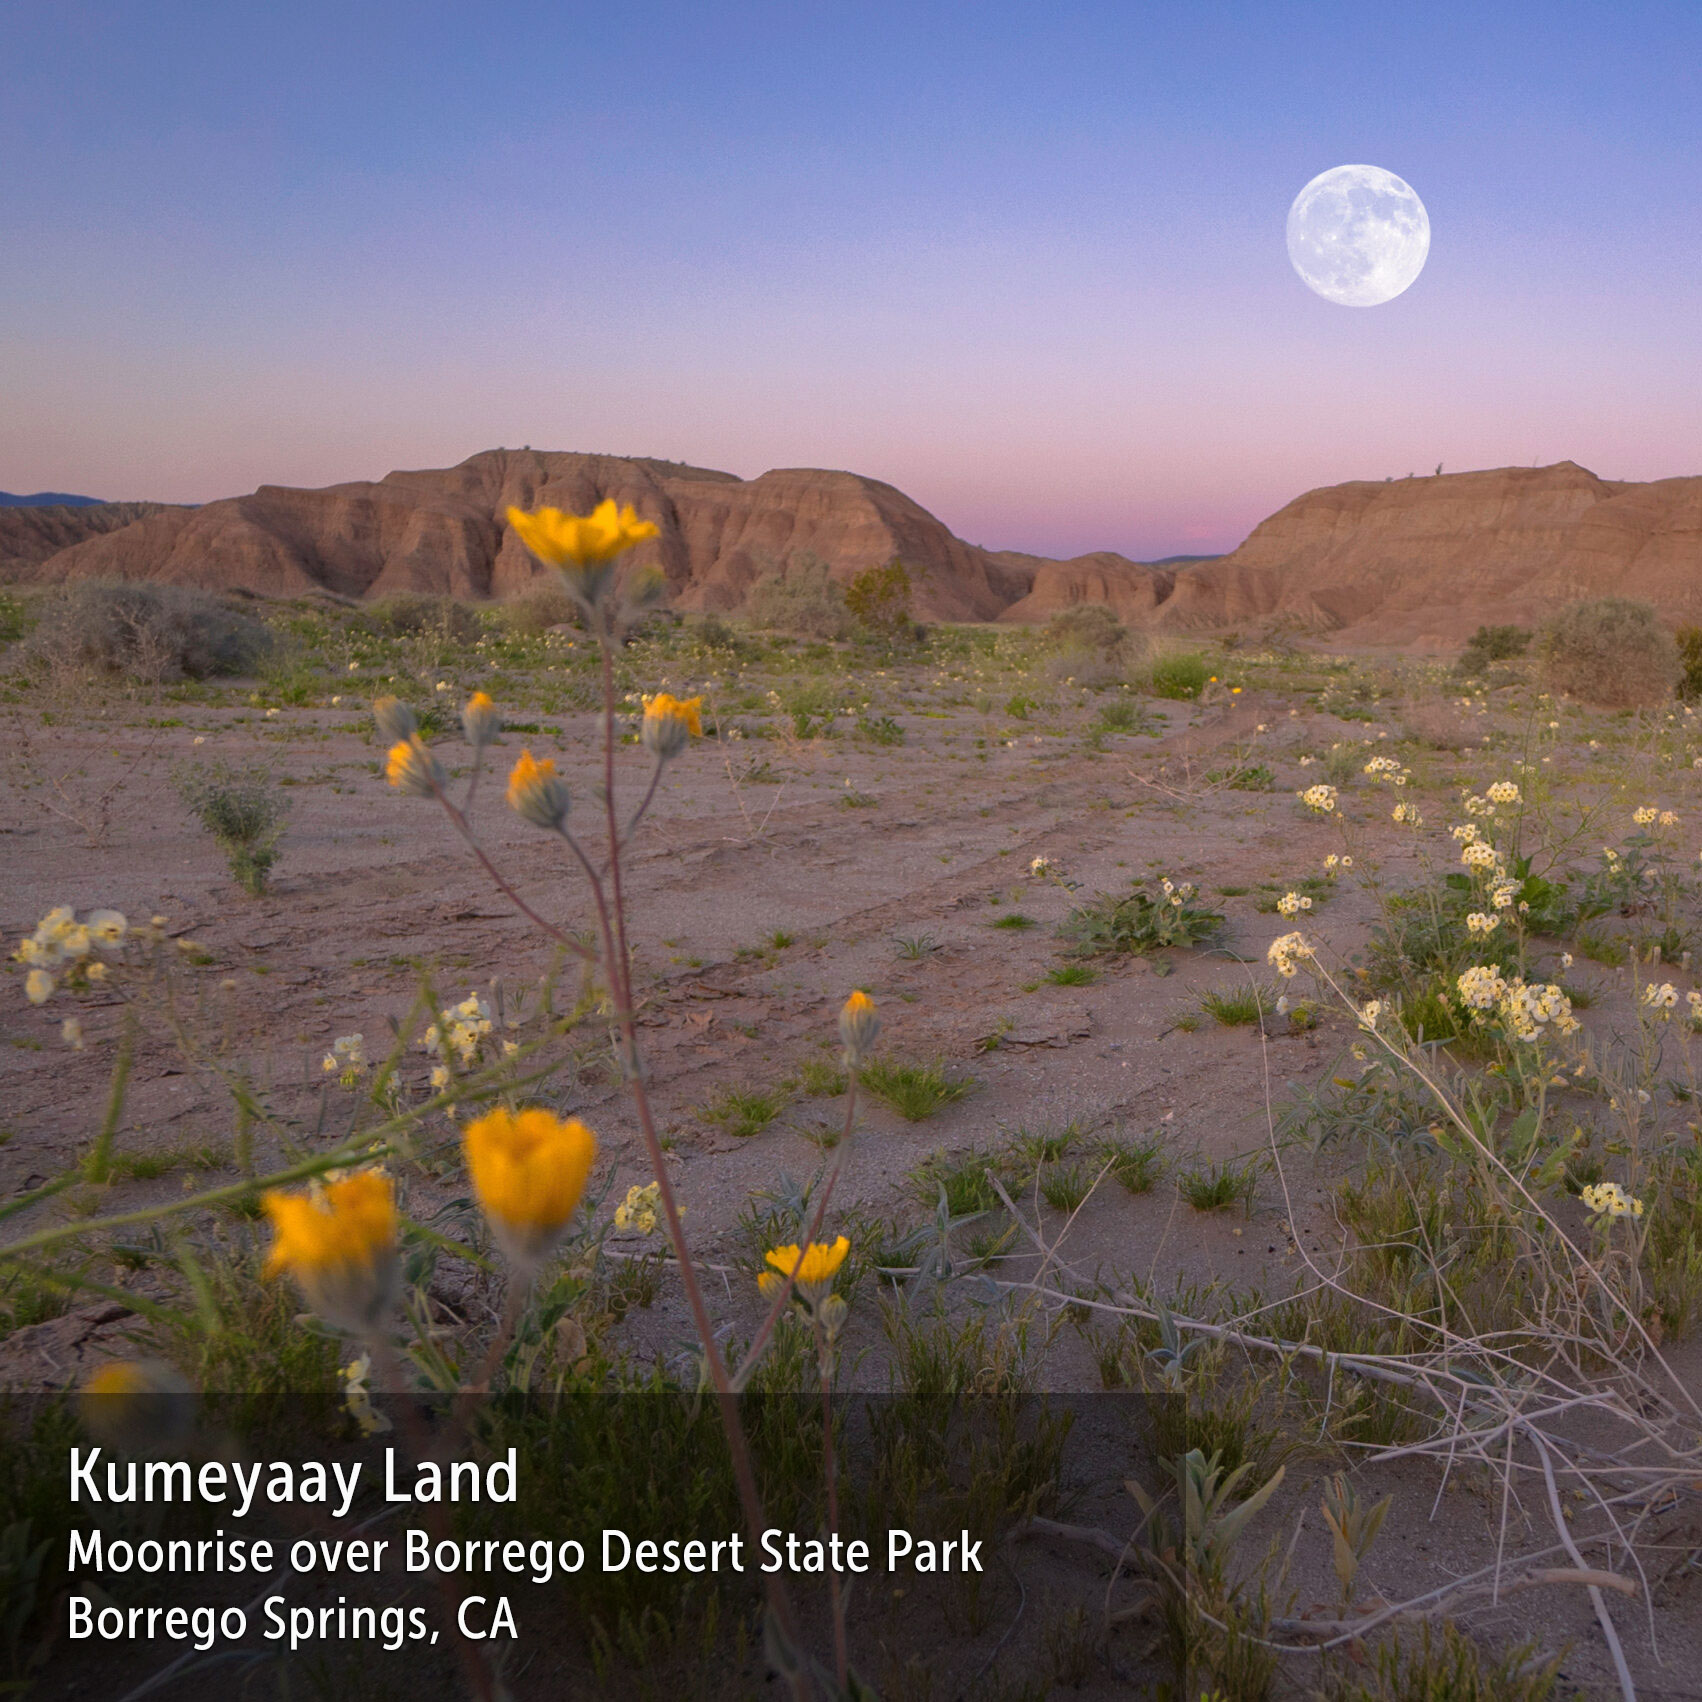 Kumeyaay Land - Moonrise over Borrego Springs Desert State Park. Borrego Springs, CA